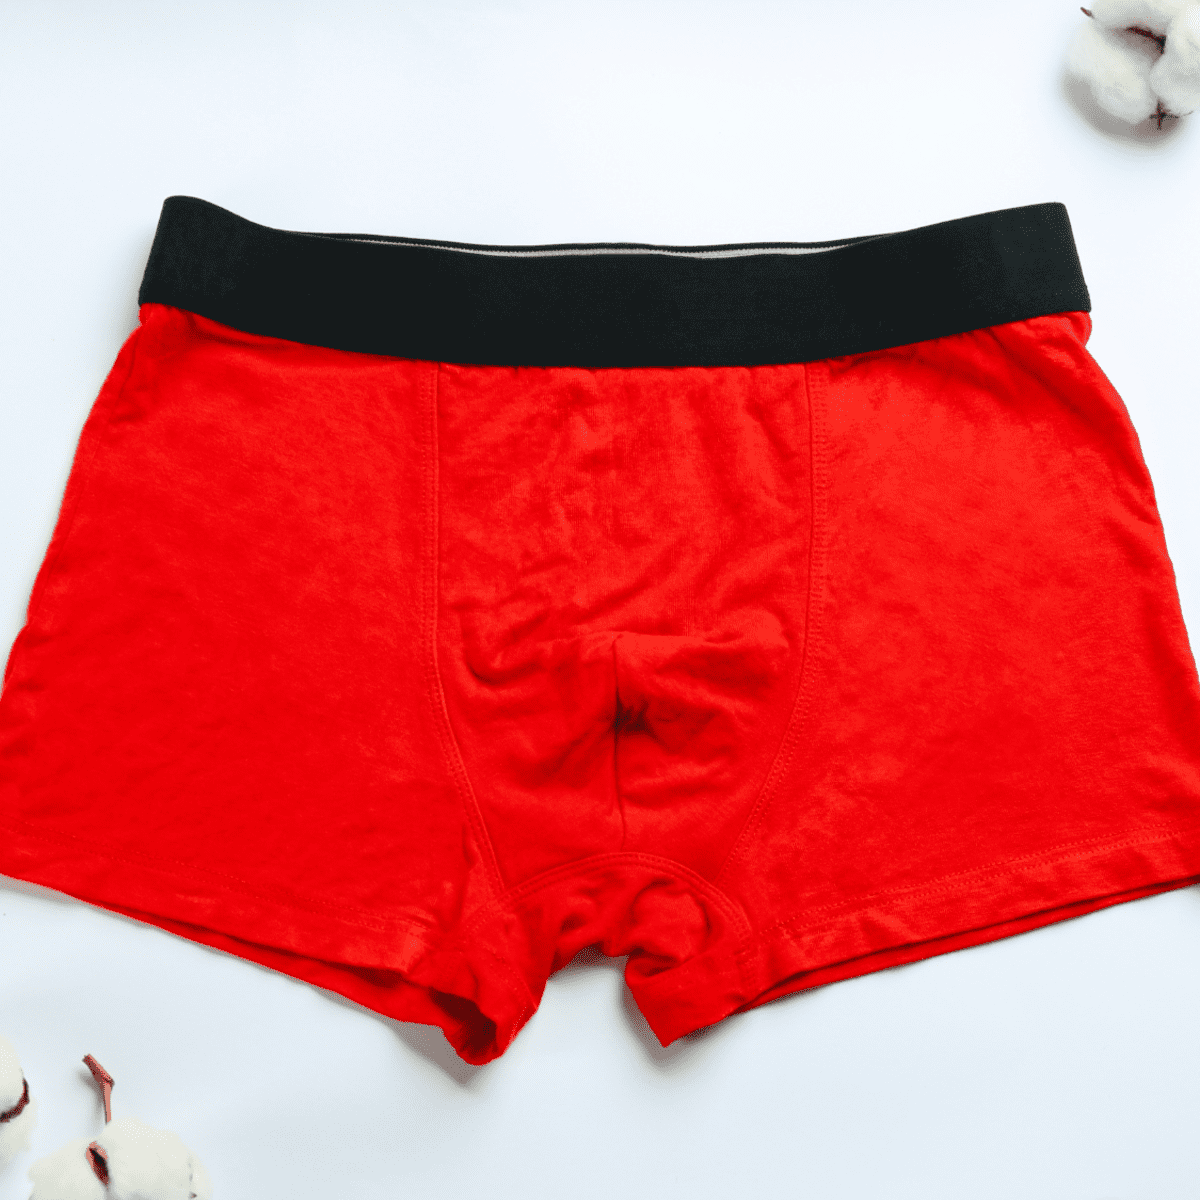 What Men Should Know About Underwear